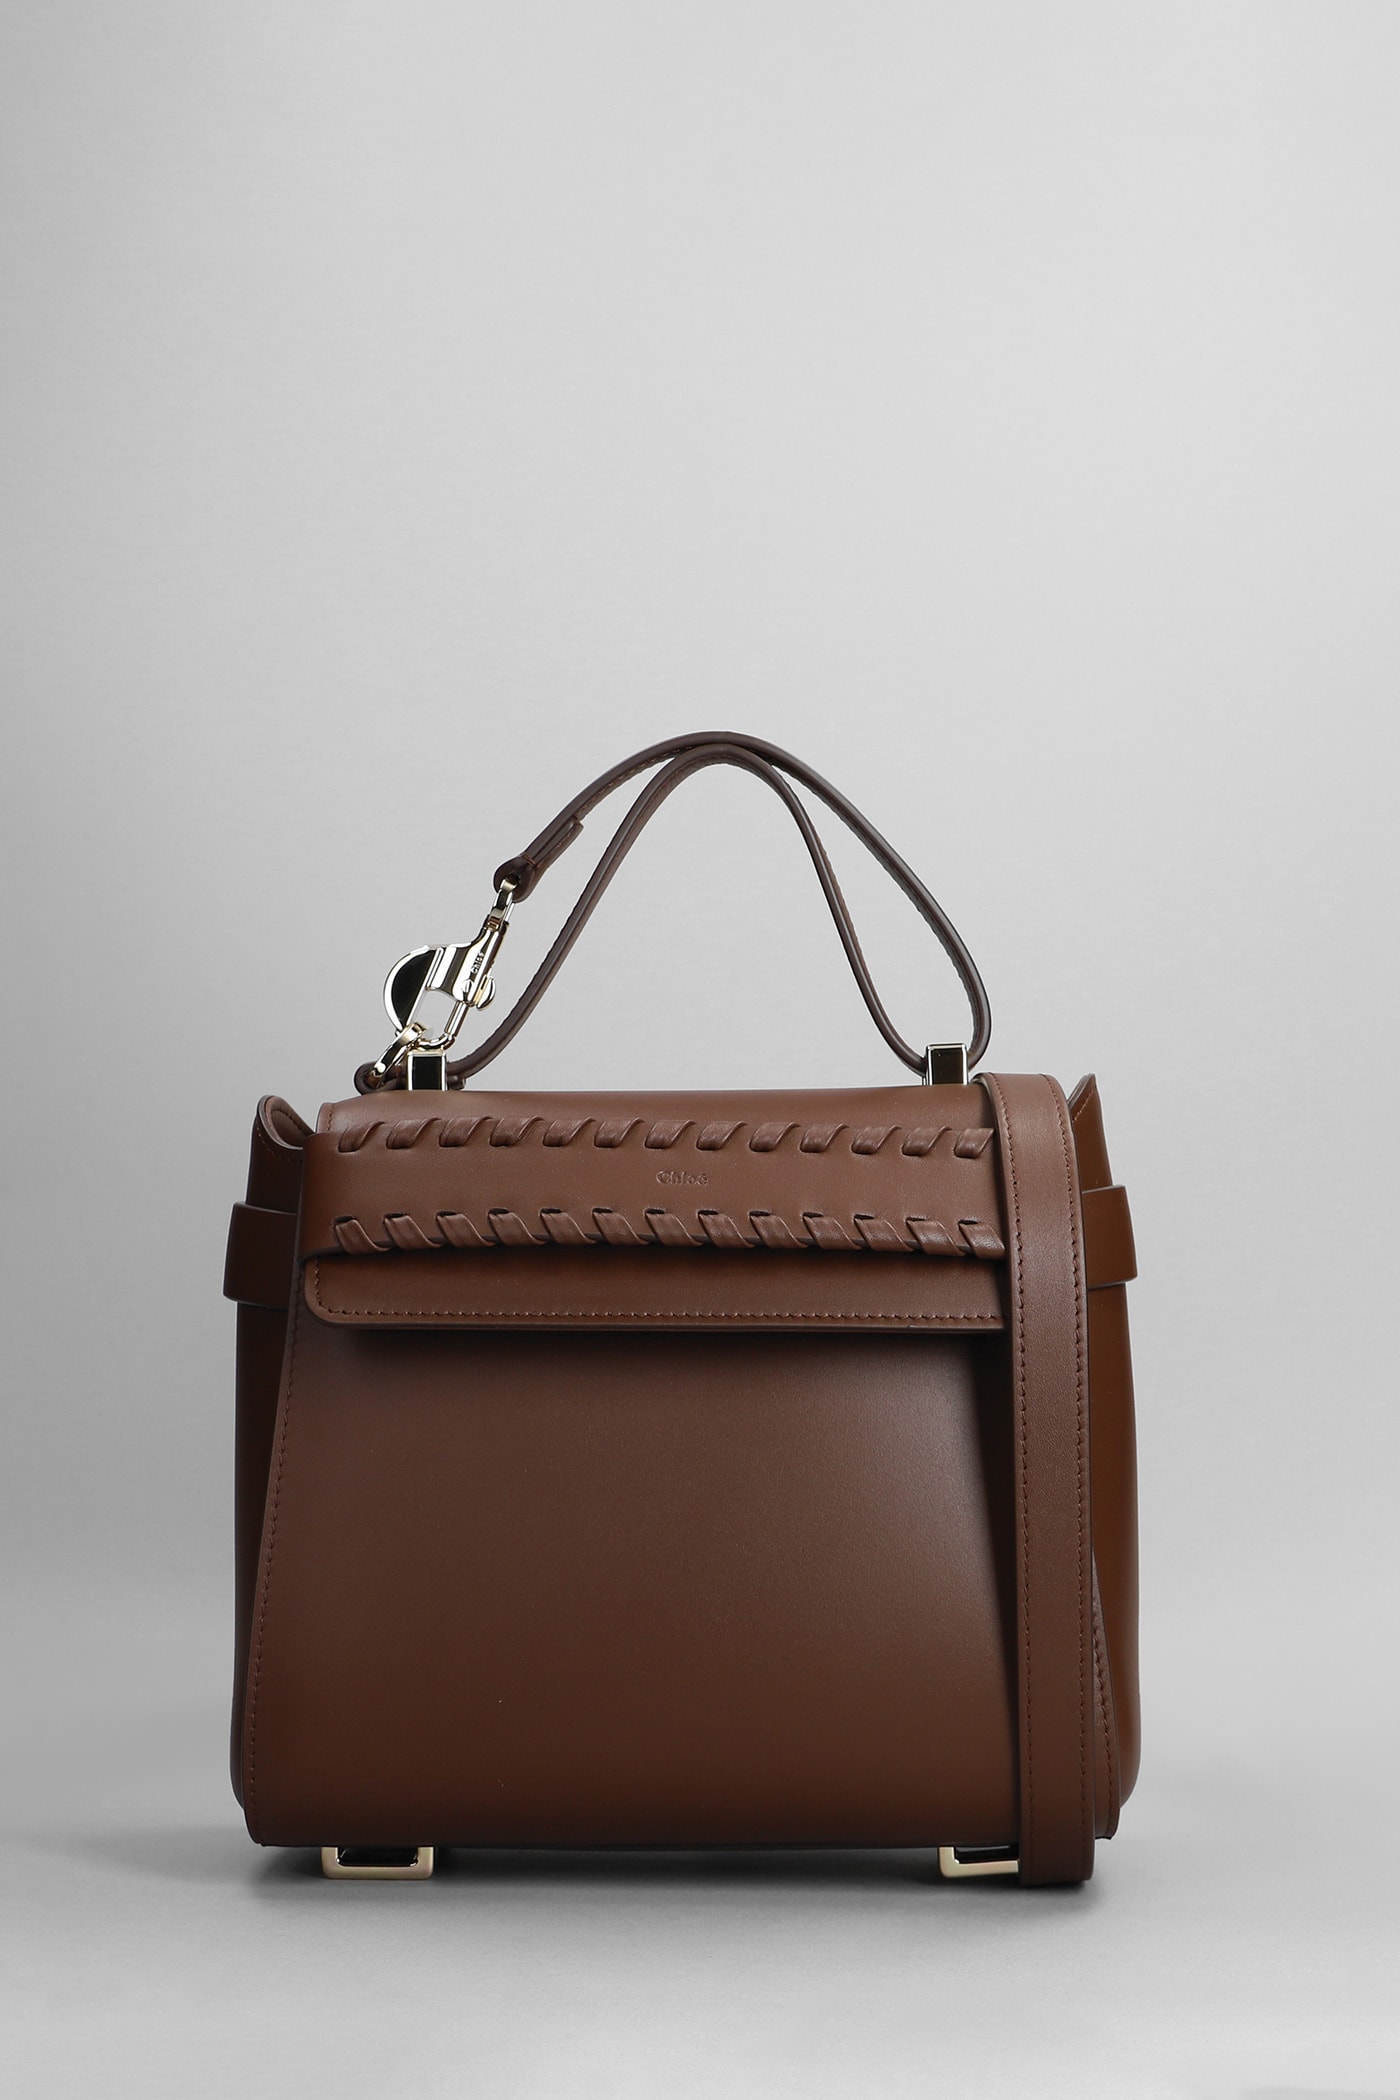 Chloé Nacha Hand Bag In Brown Leather